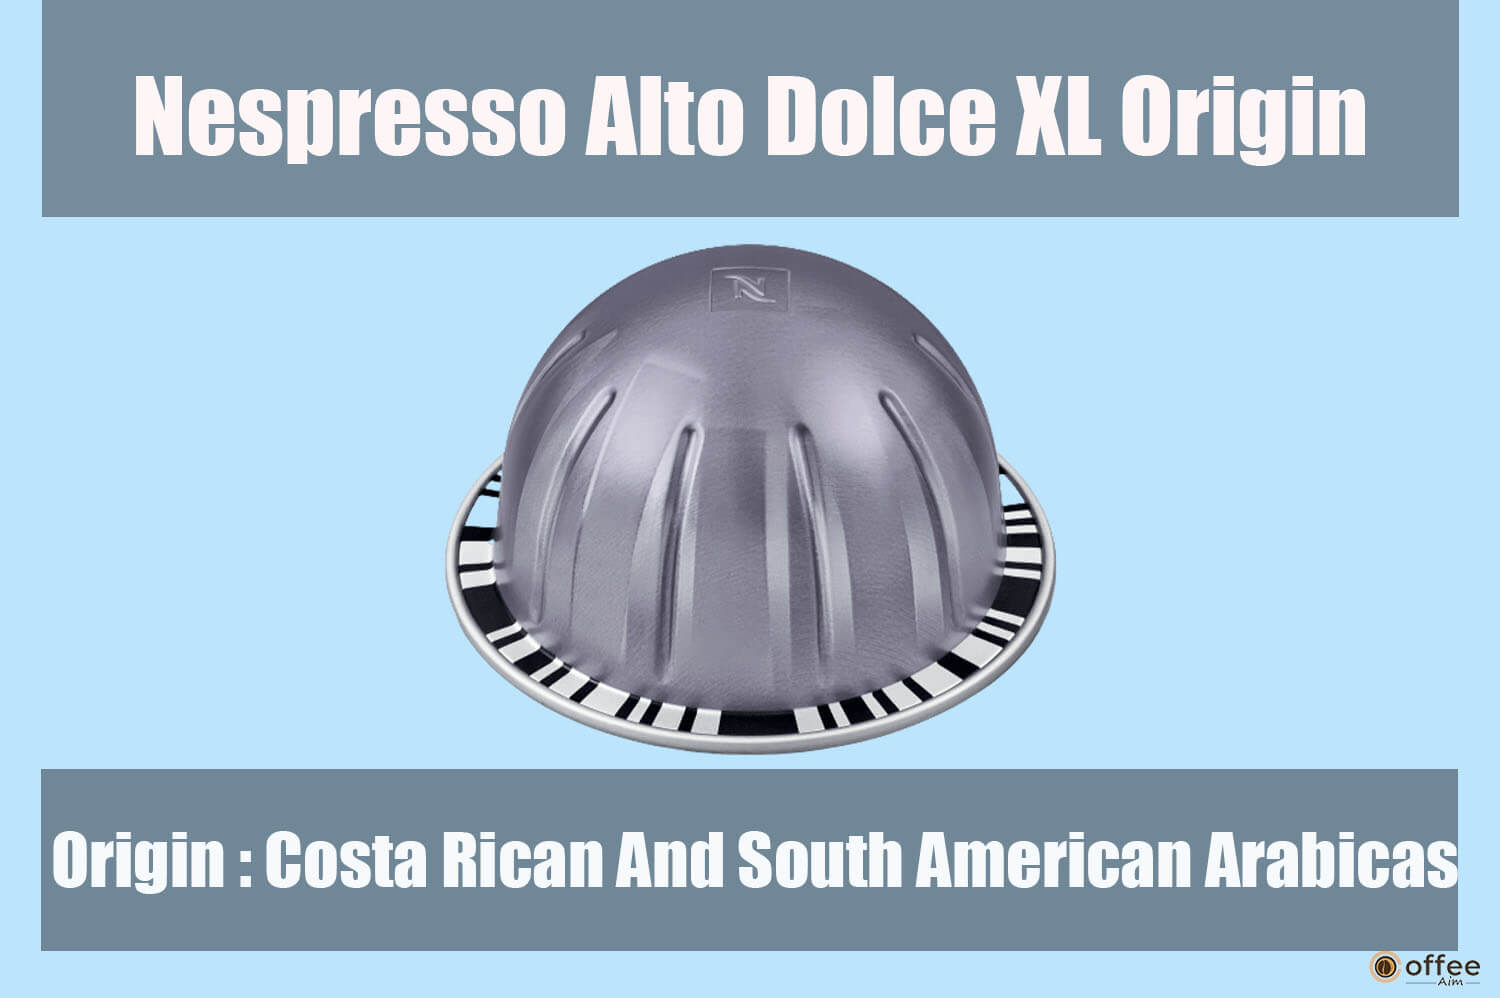 This image illustrates Nespresso Alto Dolce XL's origin for the "Nespresso Alto Dolce XL Review" article.